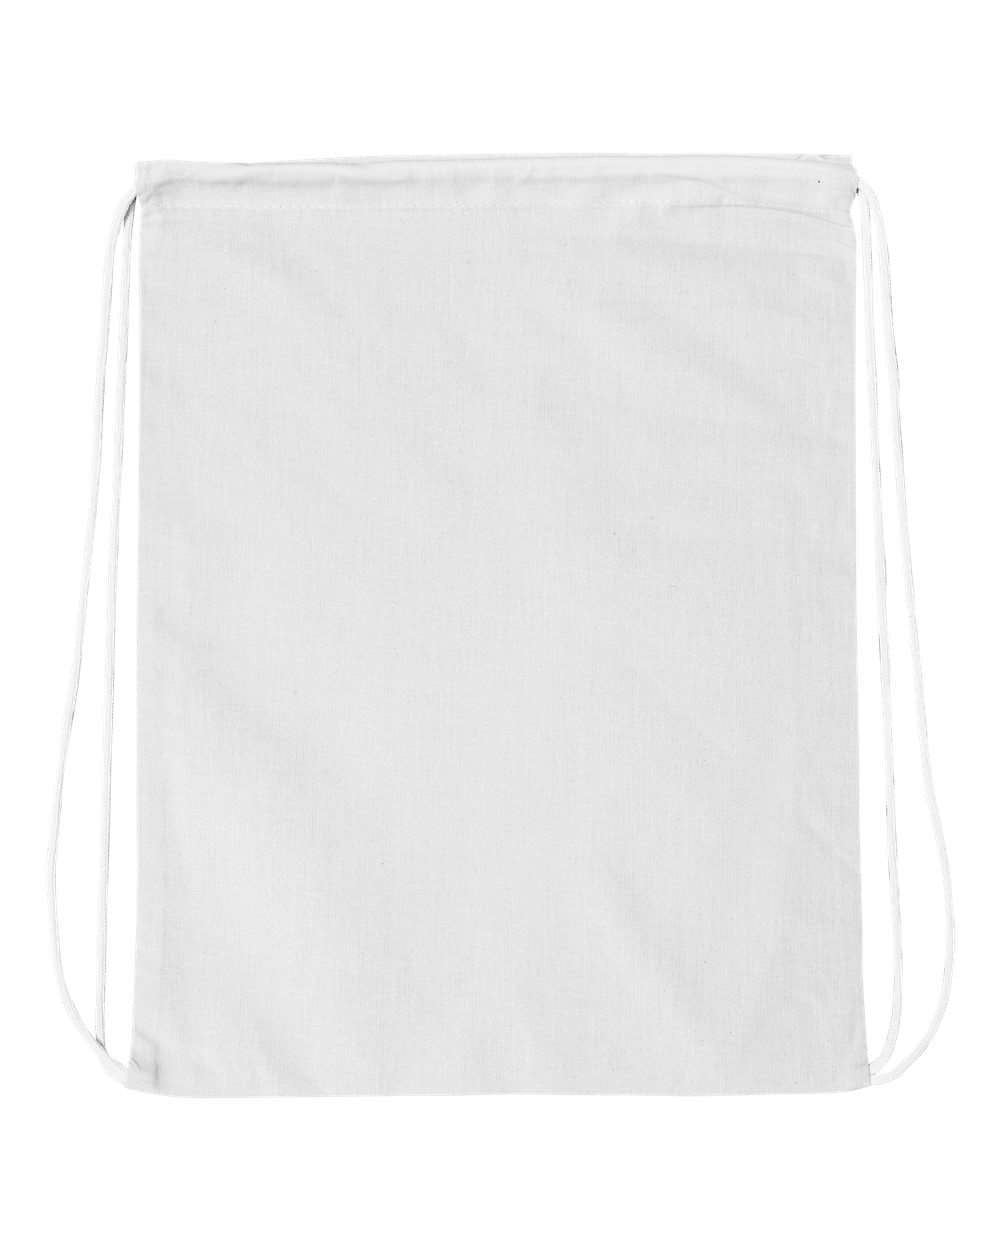 Cotton Cinch Sack - Blank